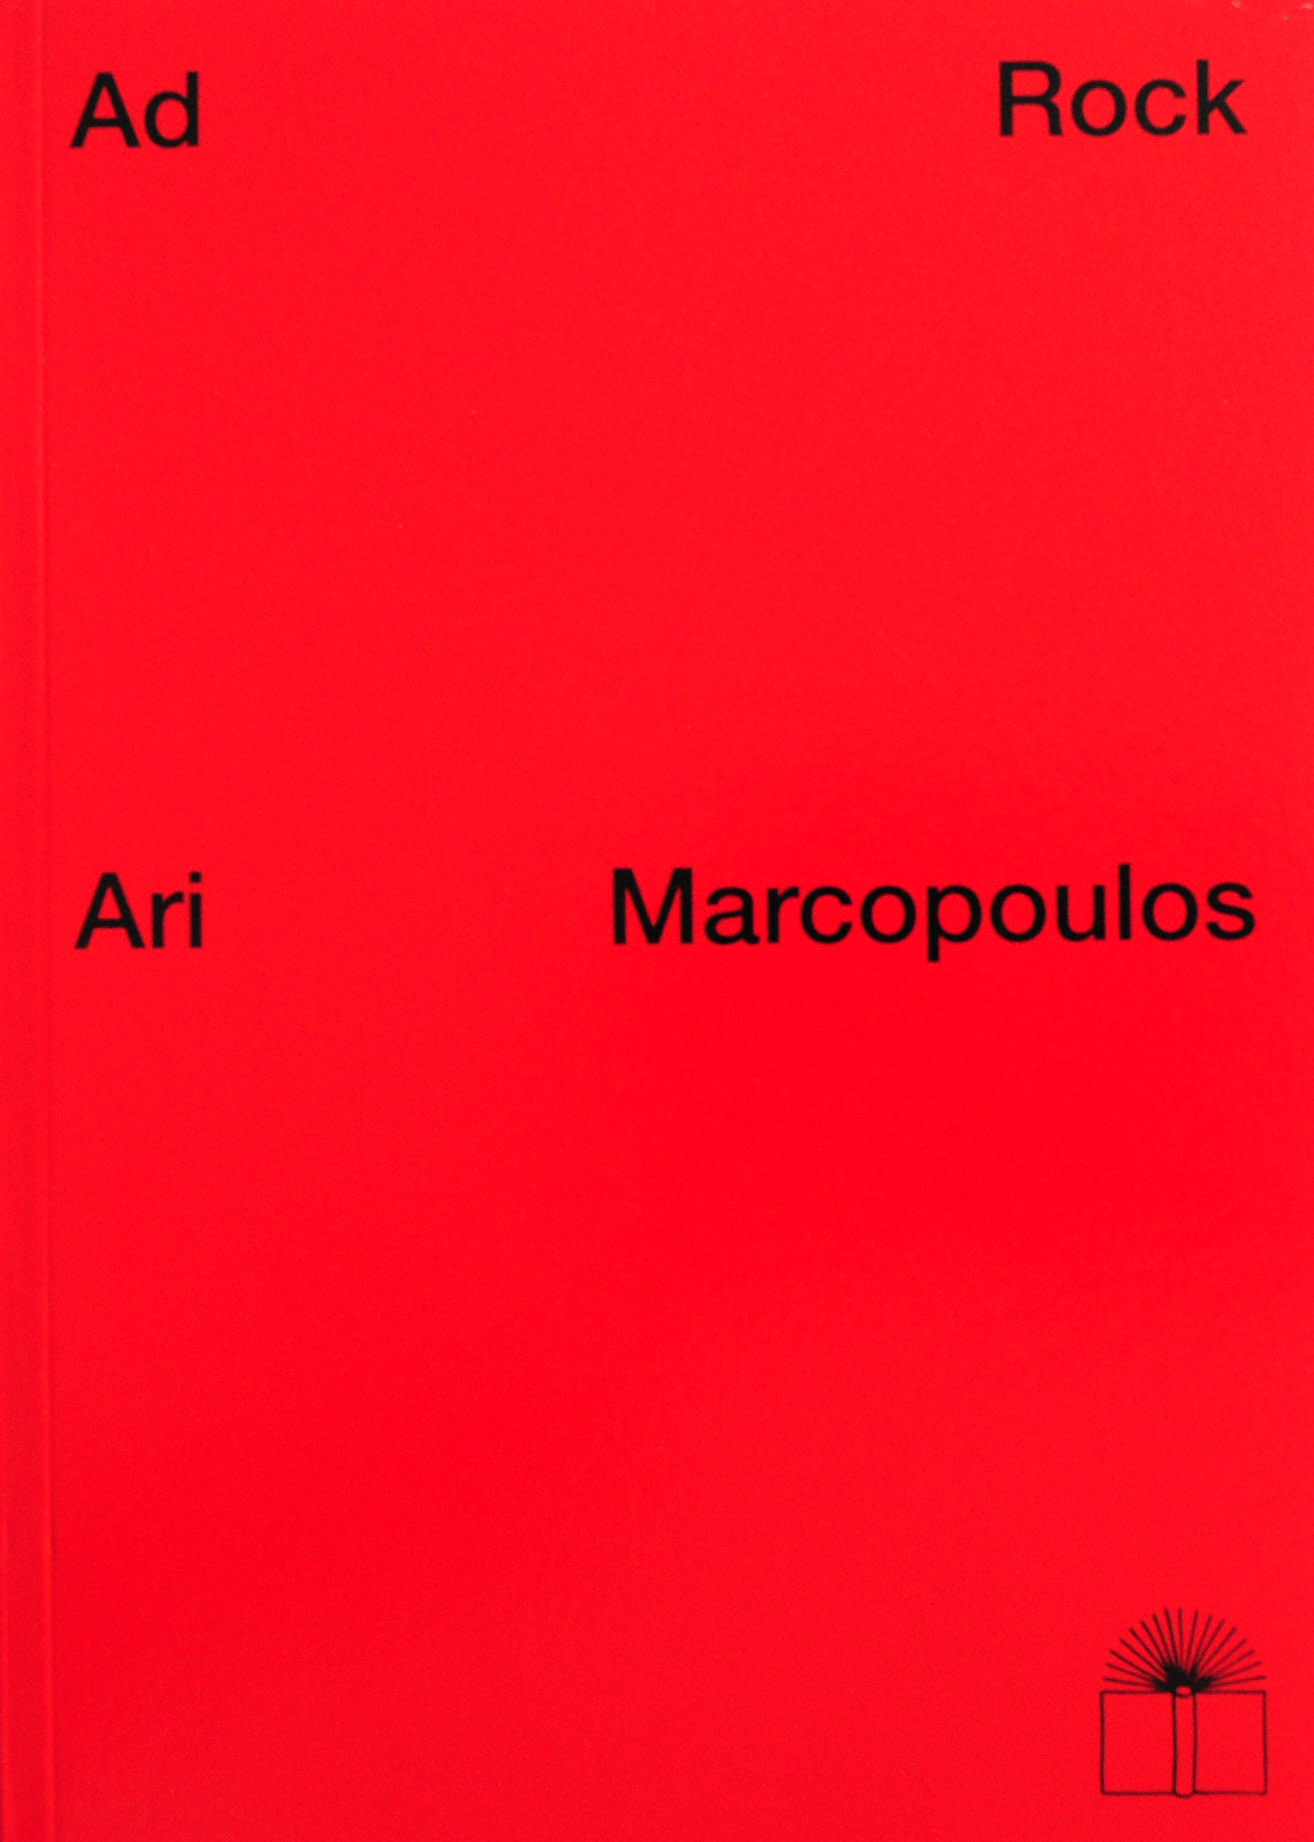 Ad Rock, Ari Marcopoulos